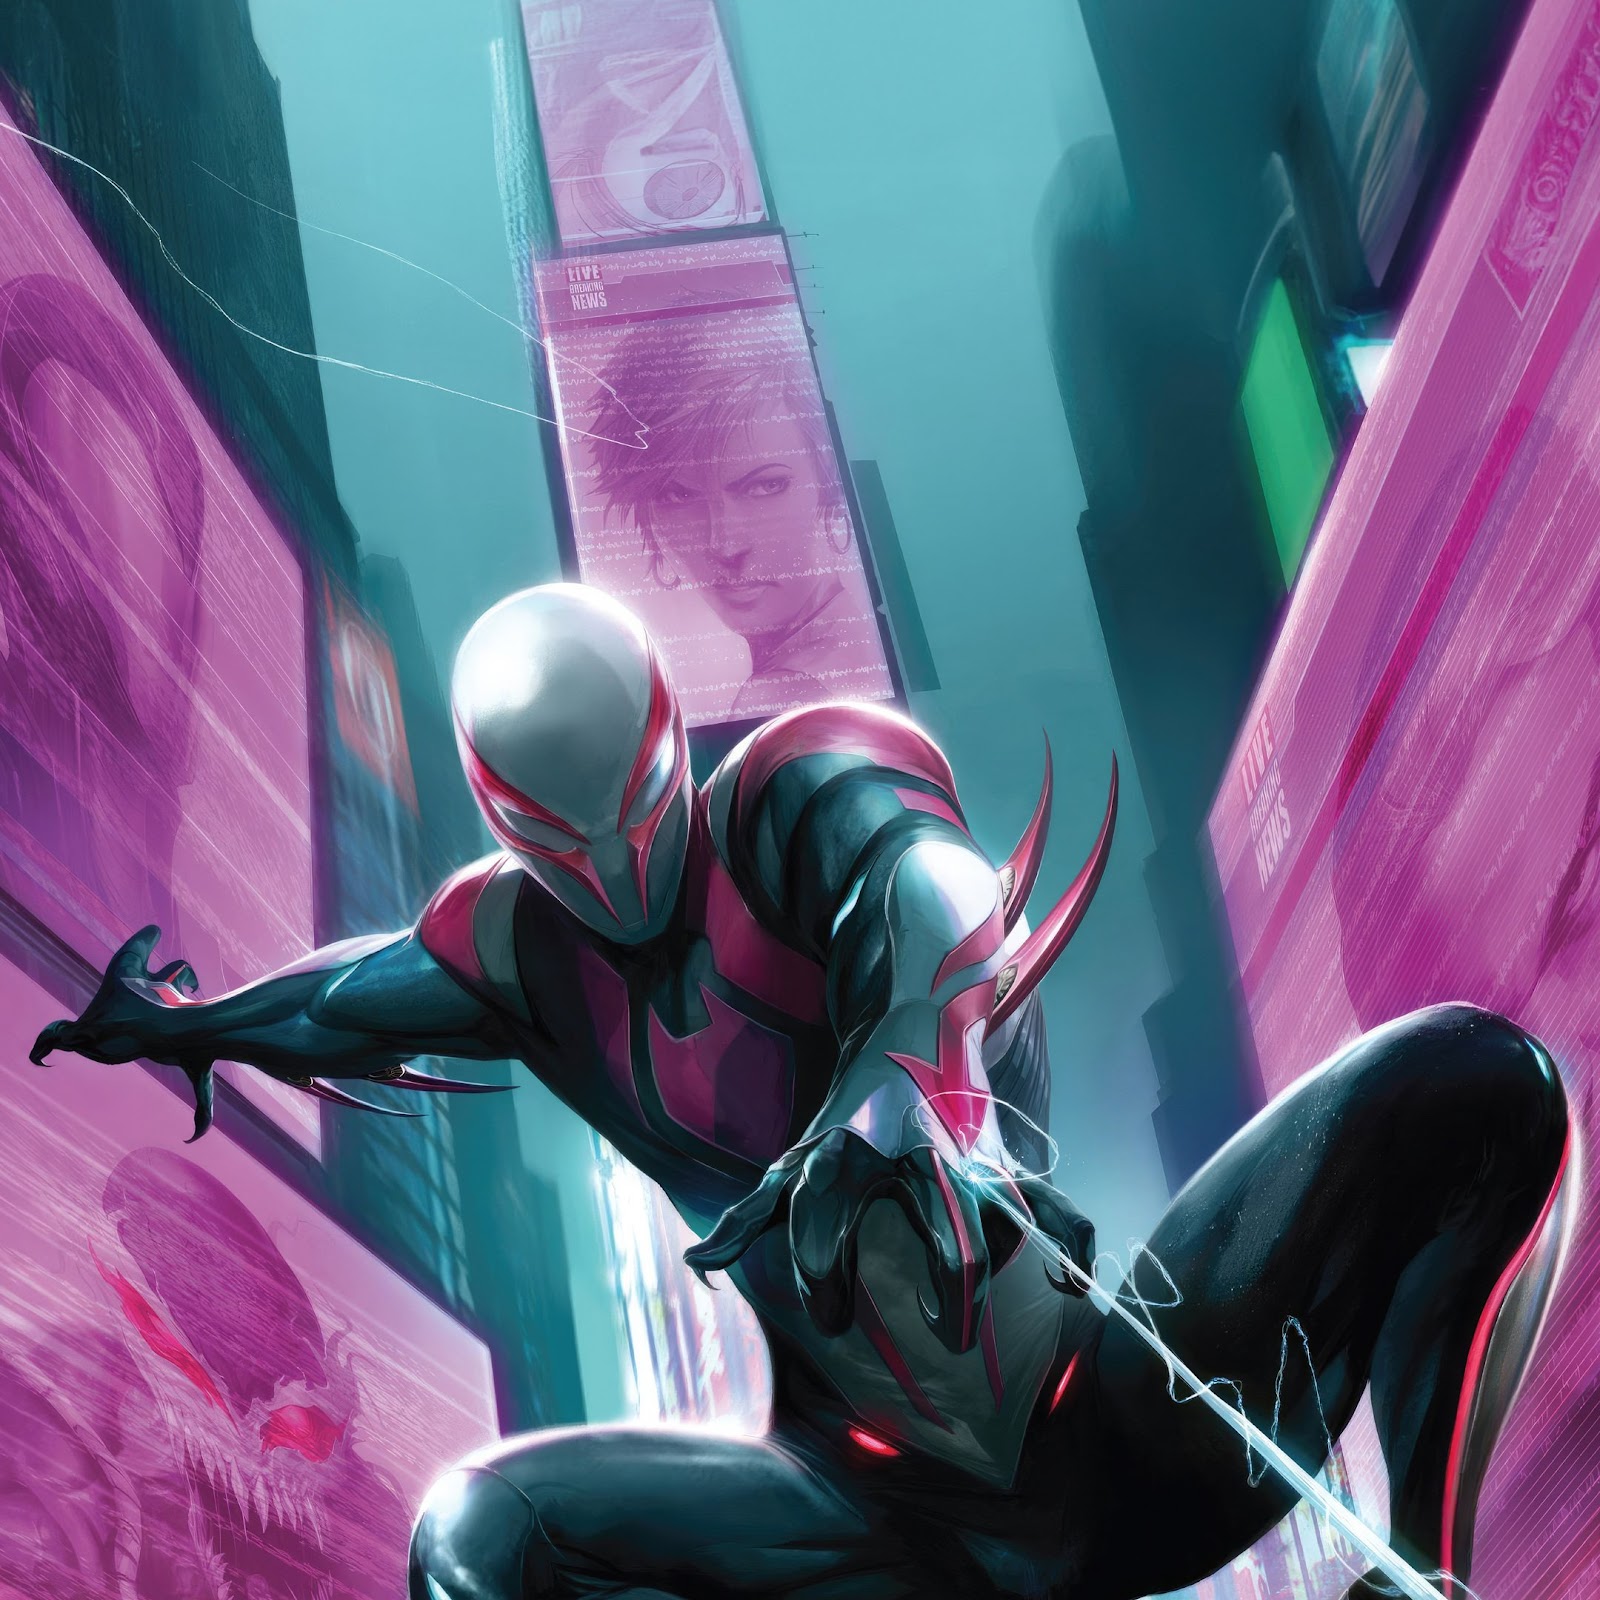 Spider Man 2099 Battling Crime In The City 4K iPhone Wallpaper